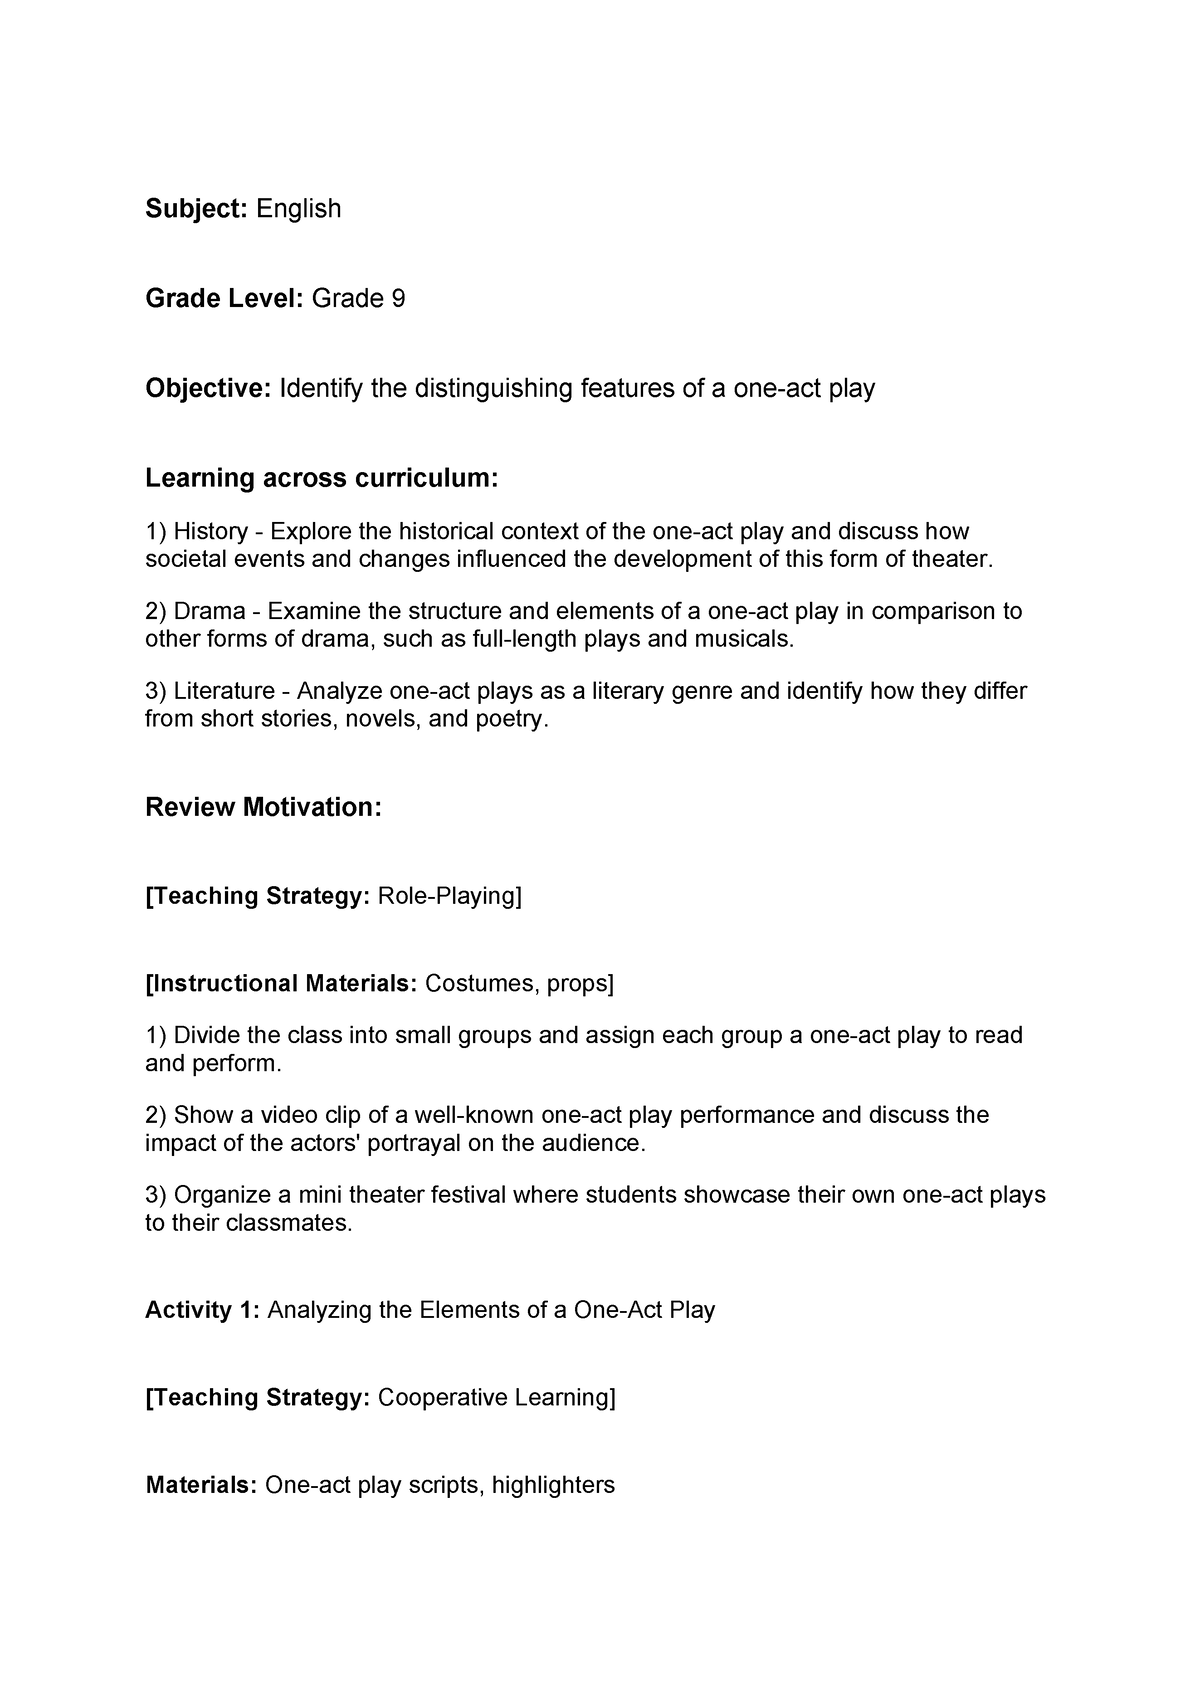 Lesson plan - Subject: English Grade Level: Grade 9 Objective: Identify ...